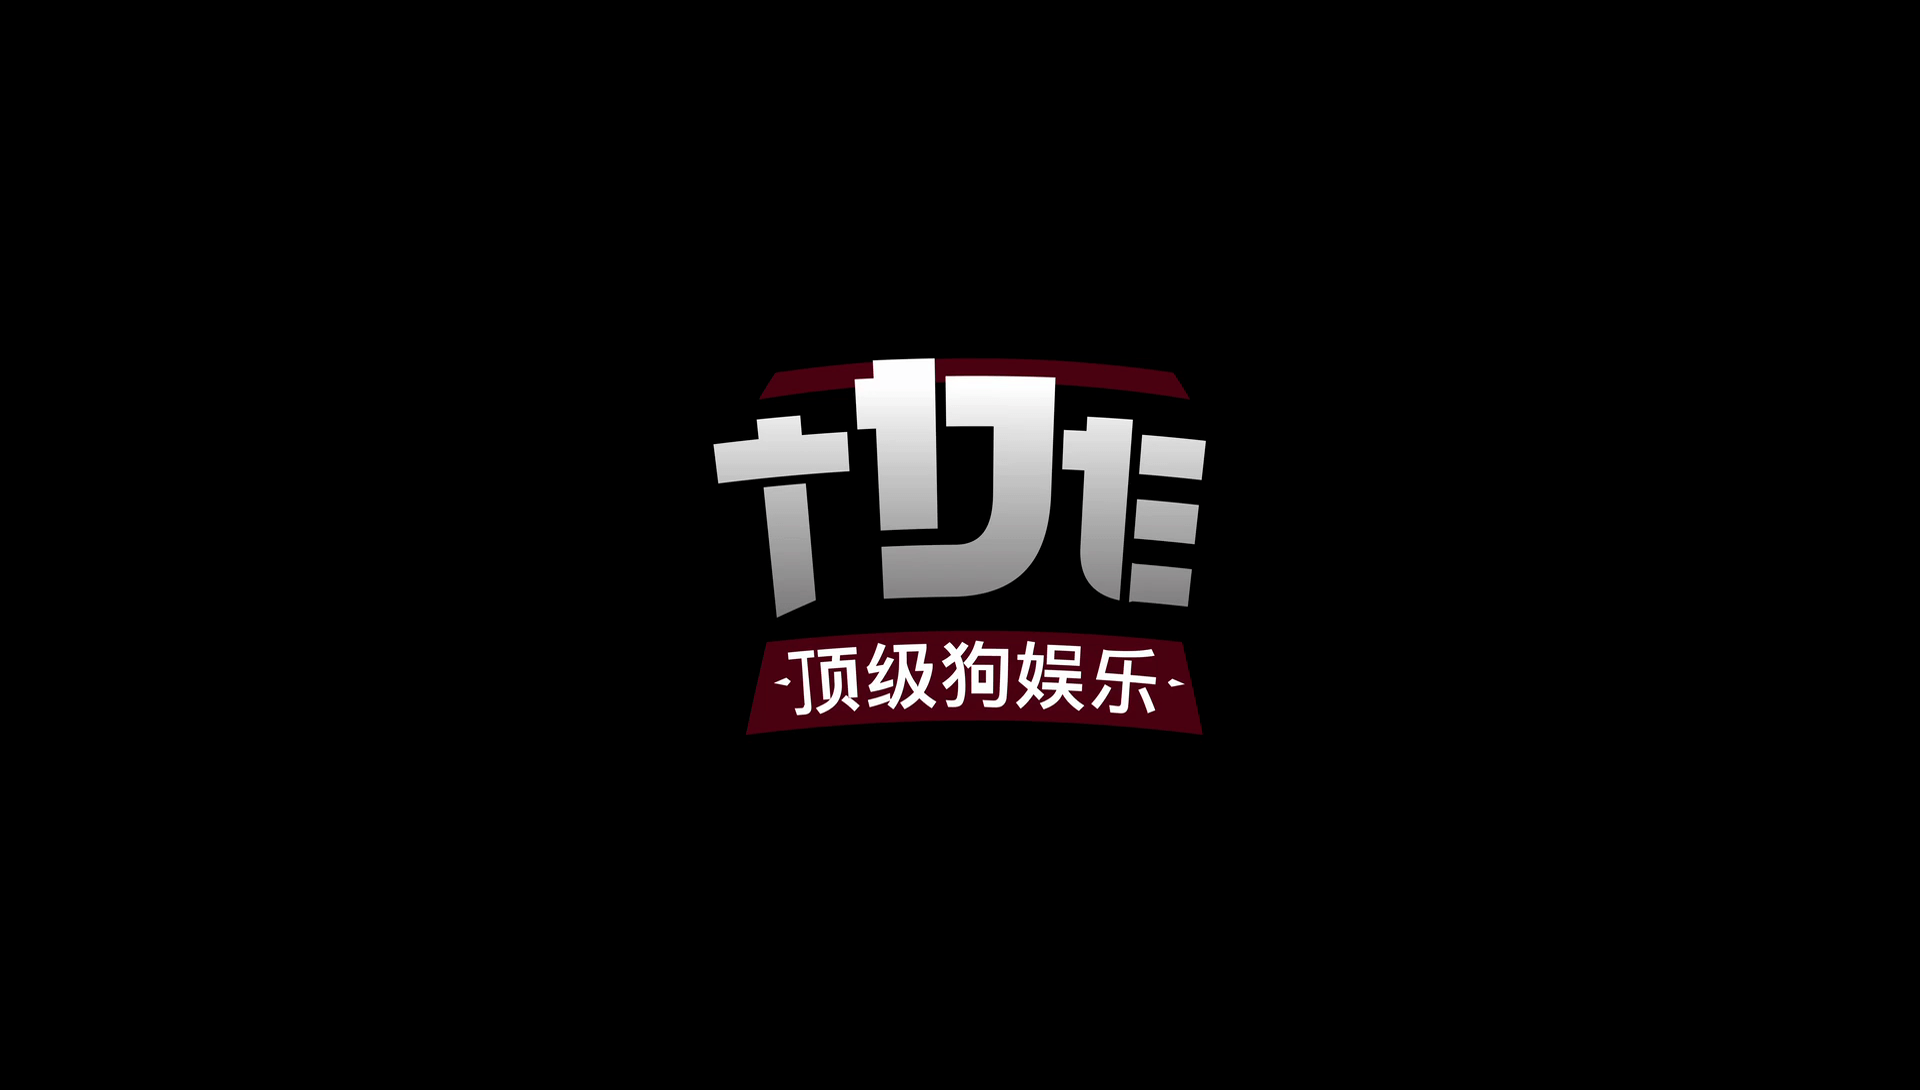 TDE Logo - New TDE Logo